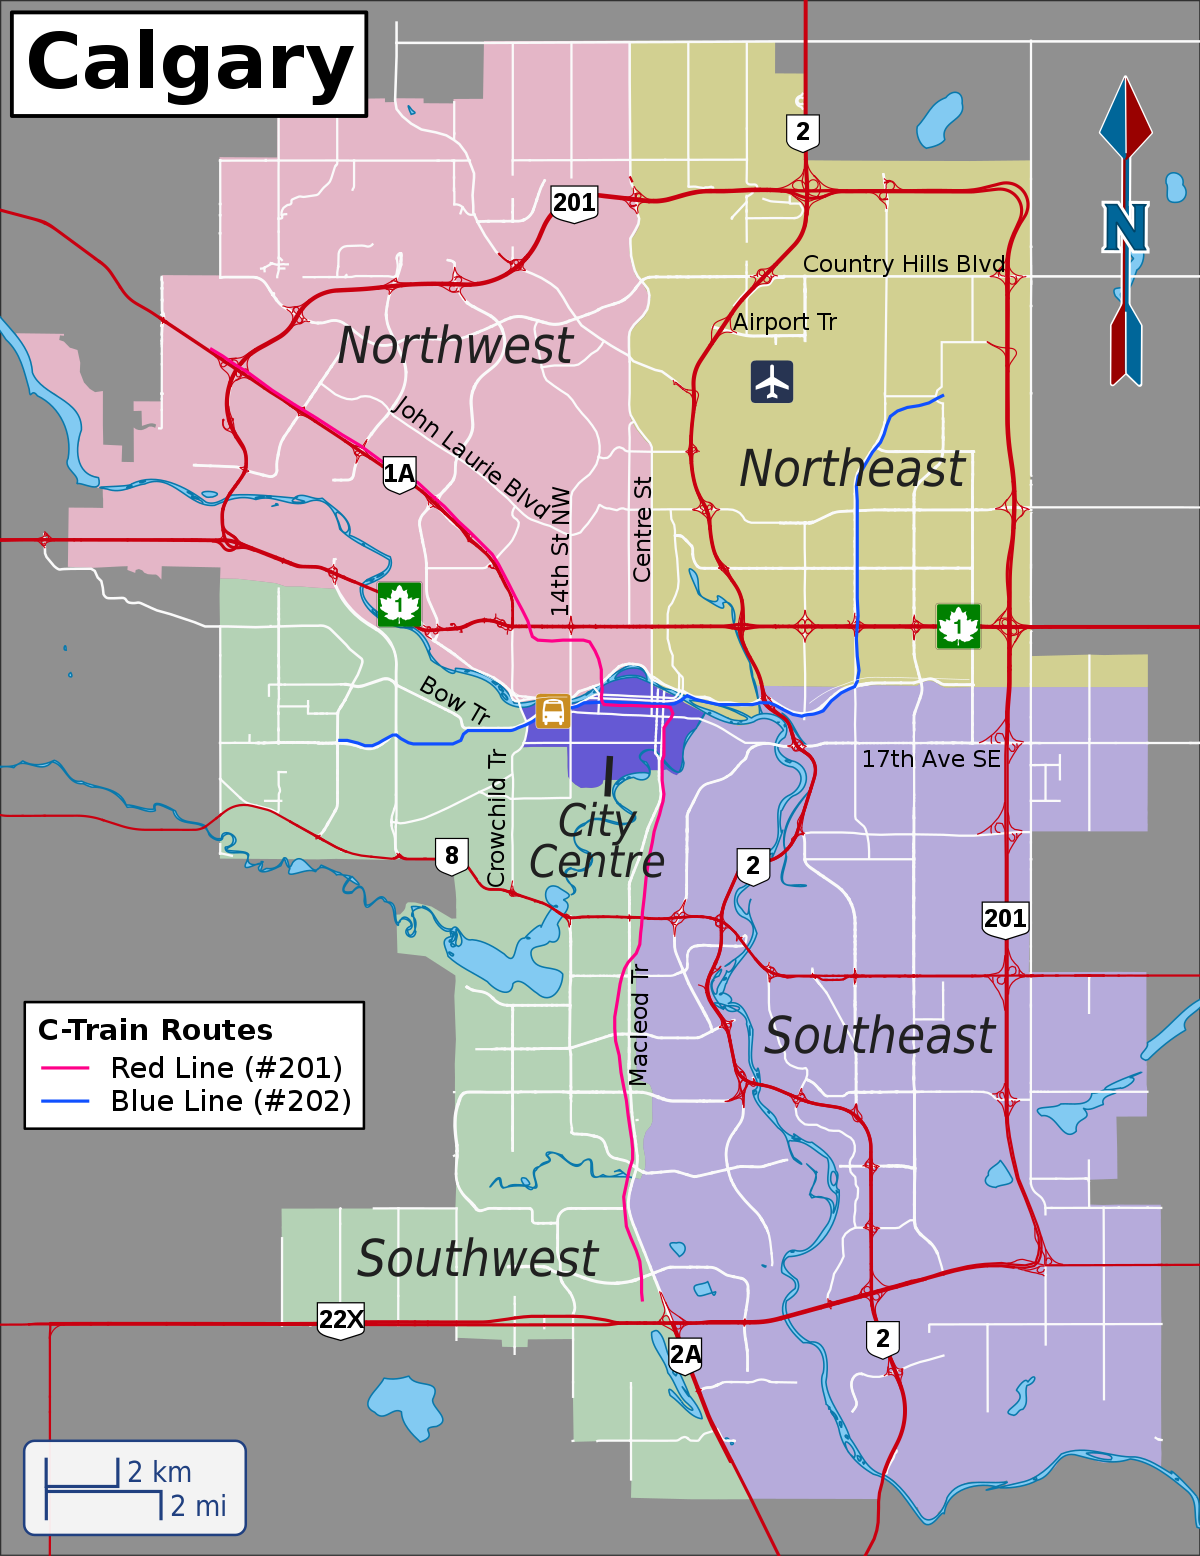 Map showing Calgary’s quadrants